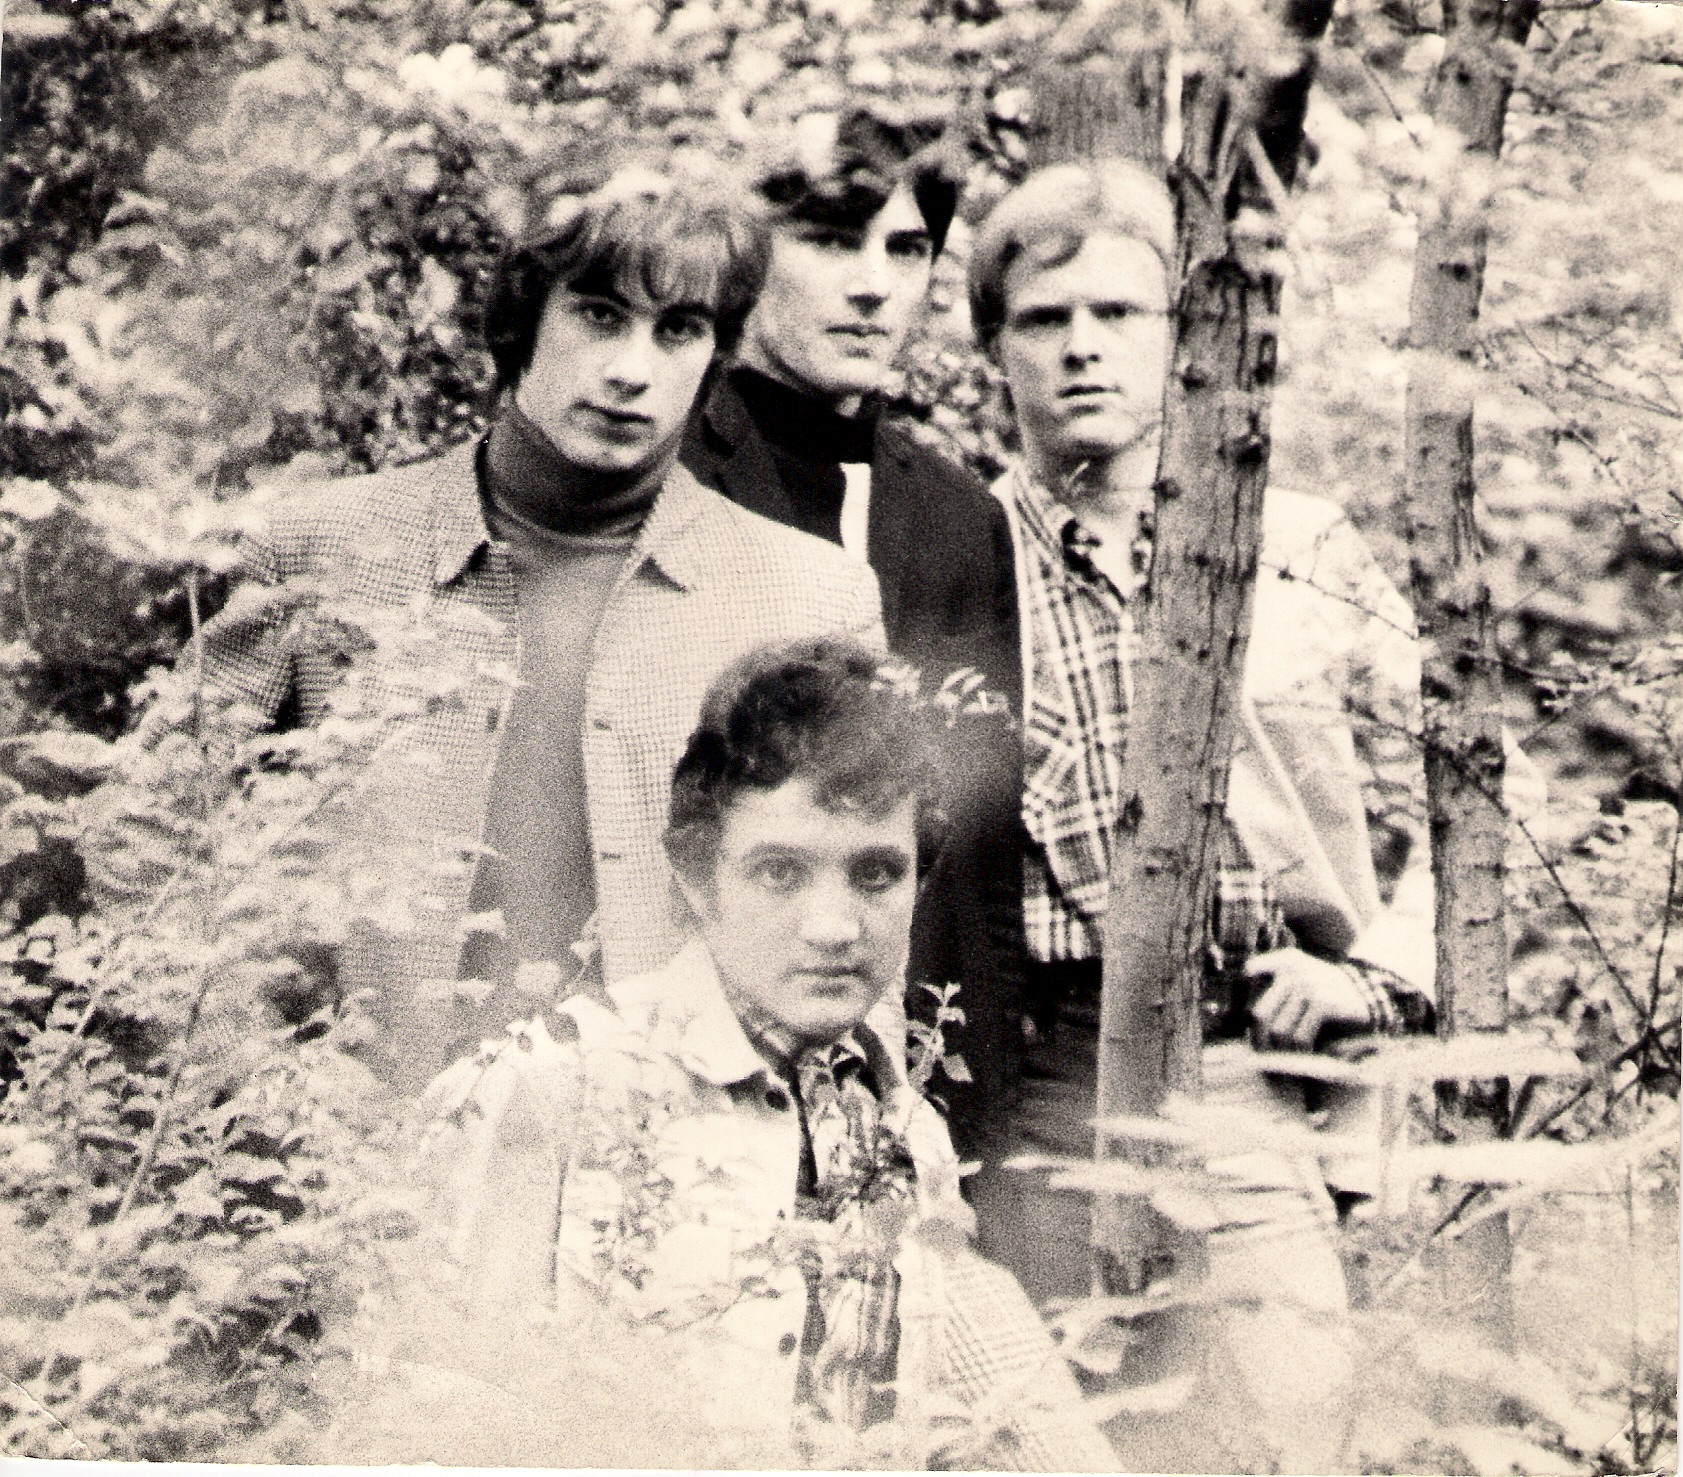 SPENCER DAVIS GROUP on Ready, Steady, Go in 1966 with Steve